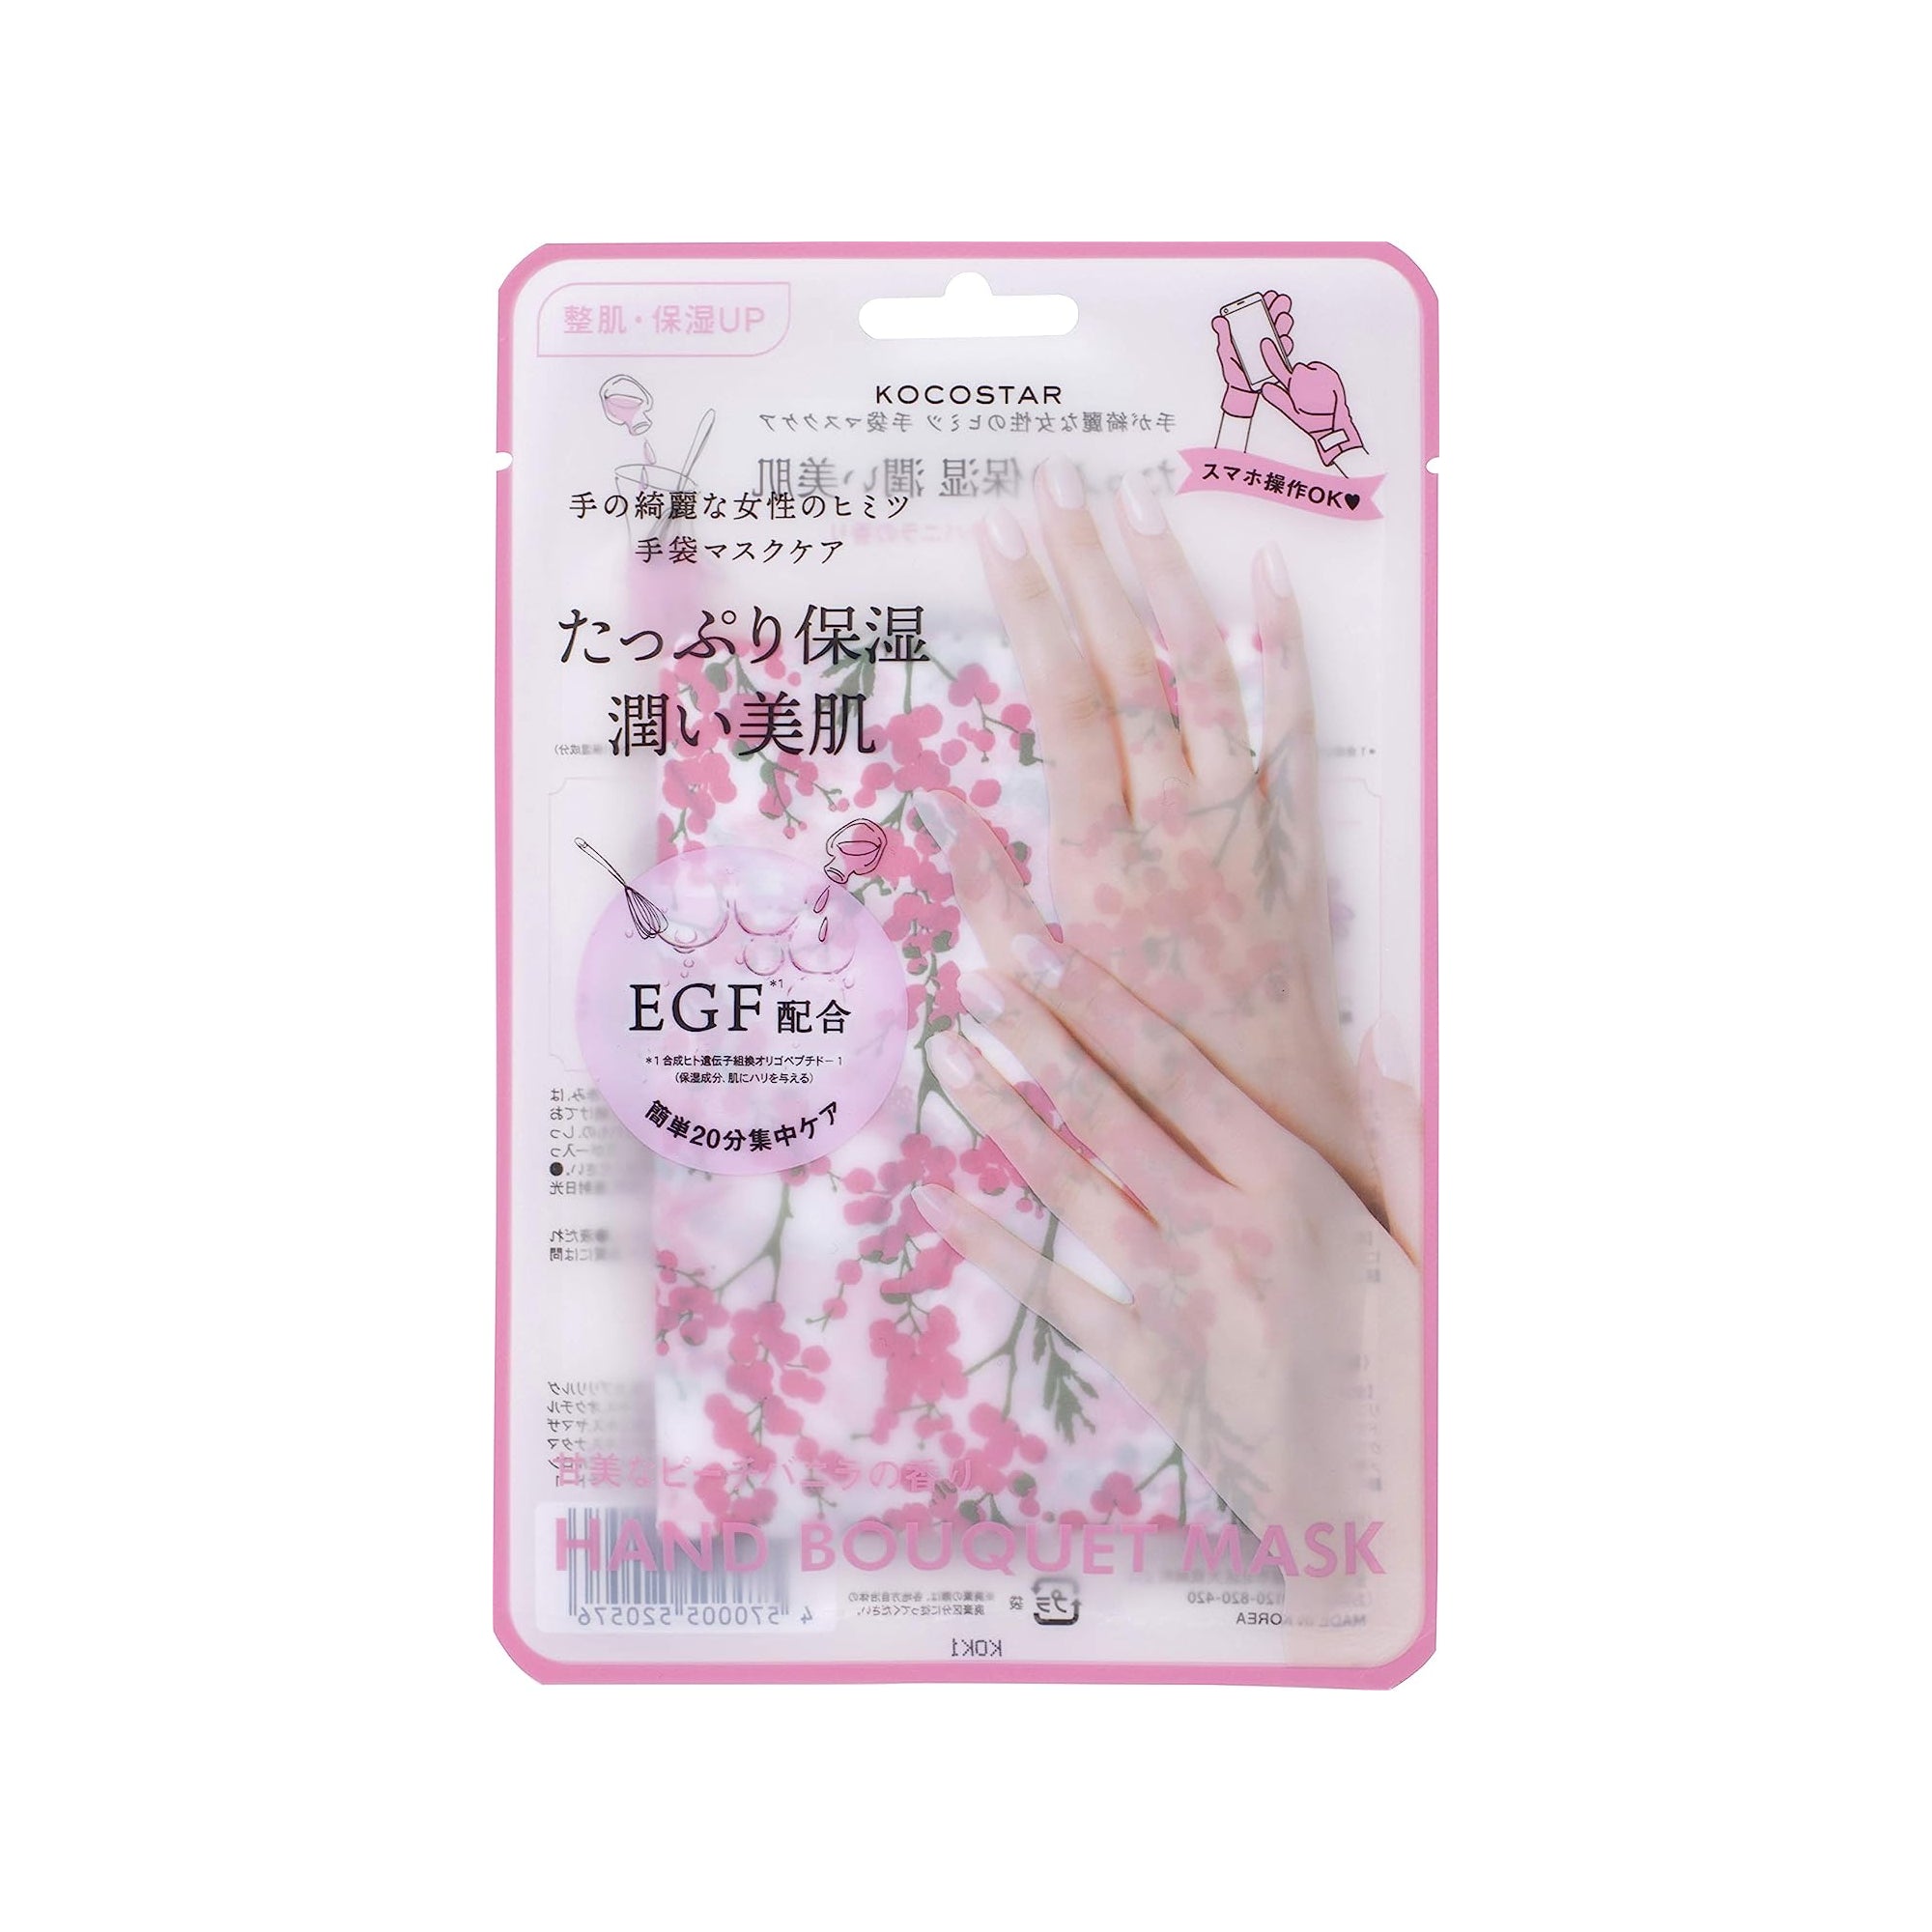 Kocostar Hand Bouquet Mask EGF (Pink) Beauty Kocostar   